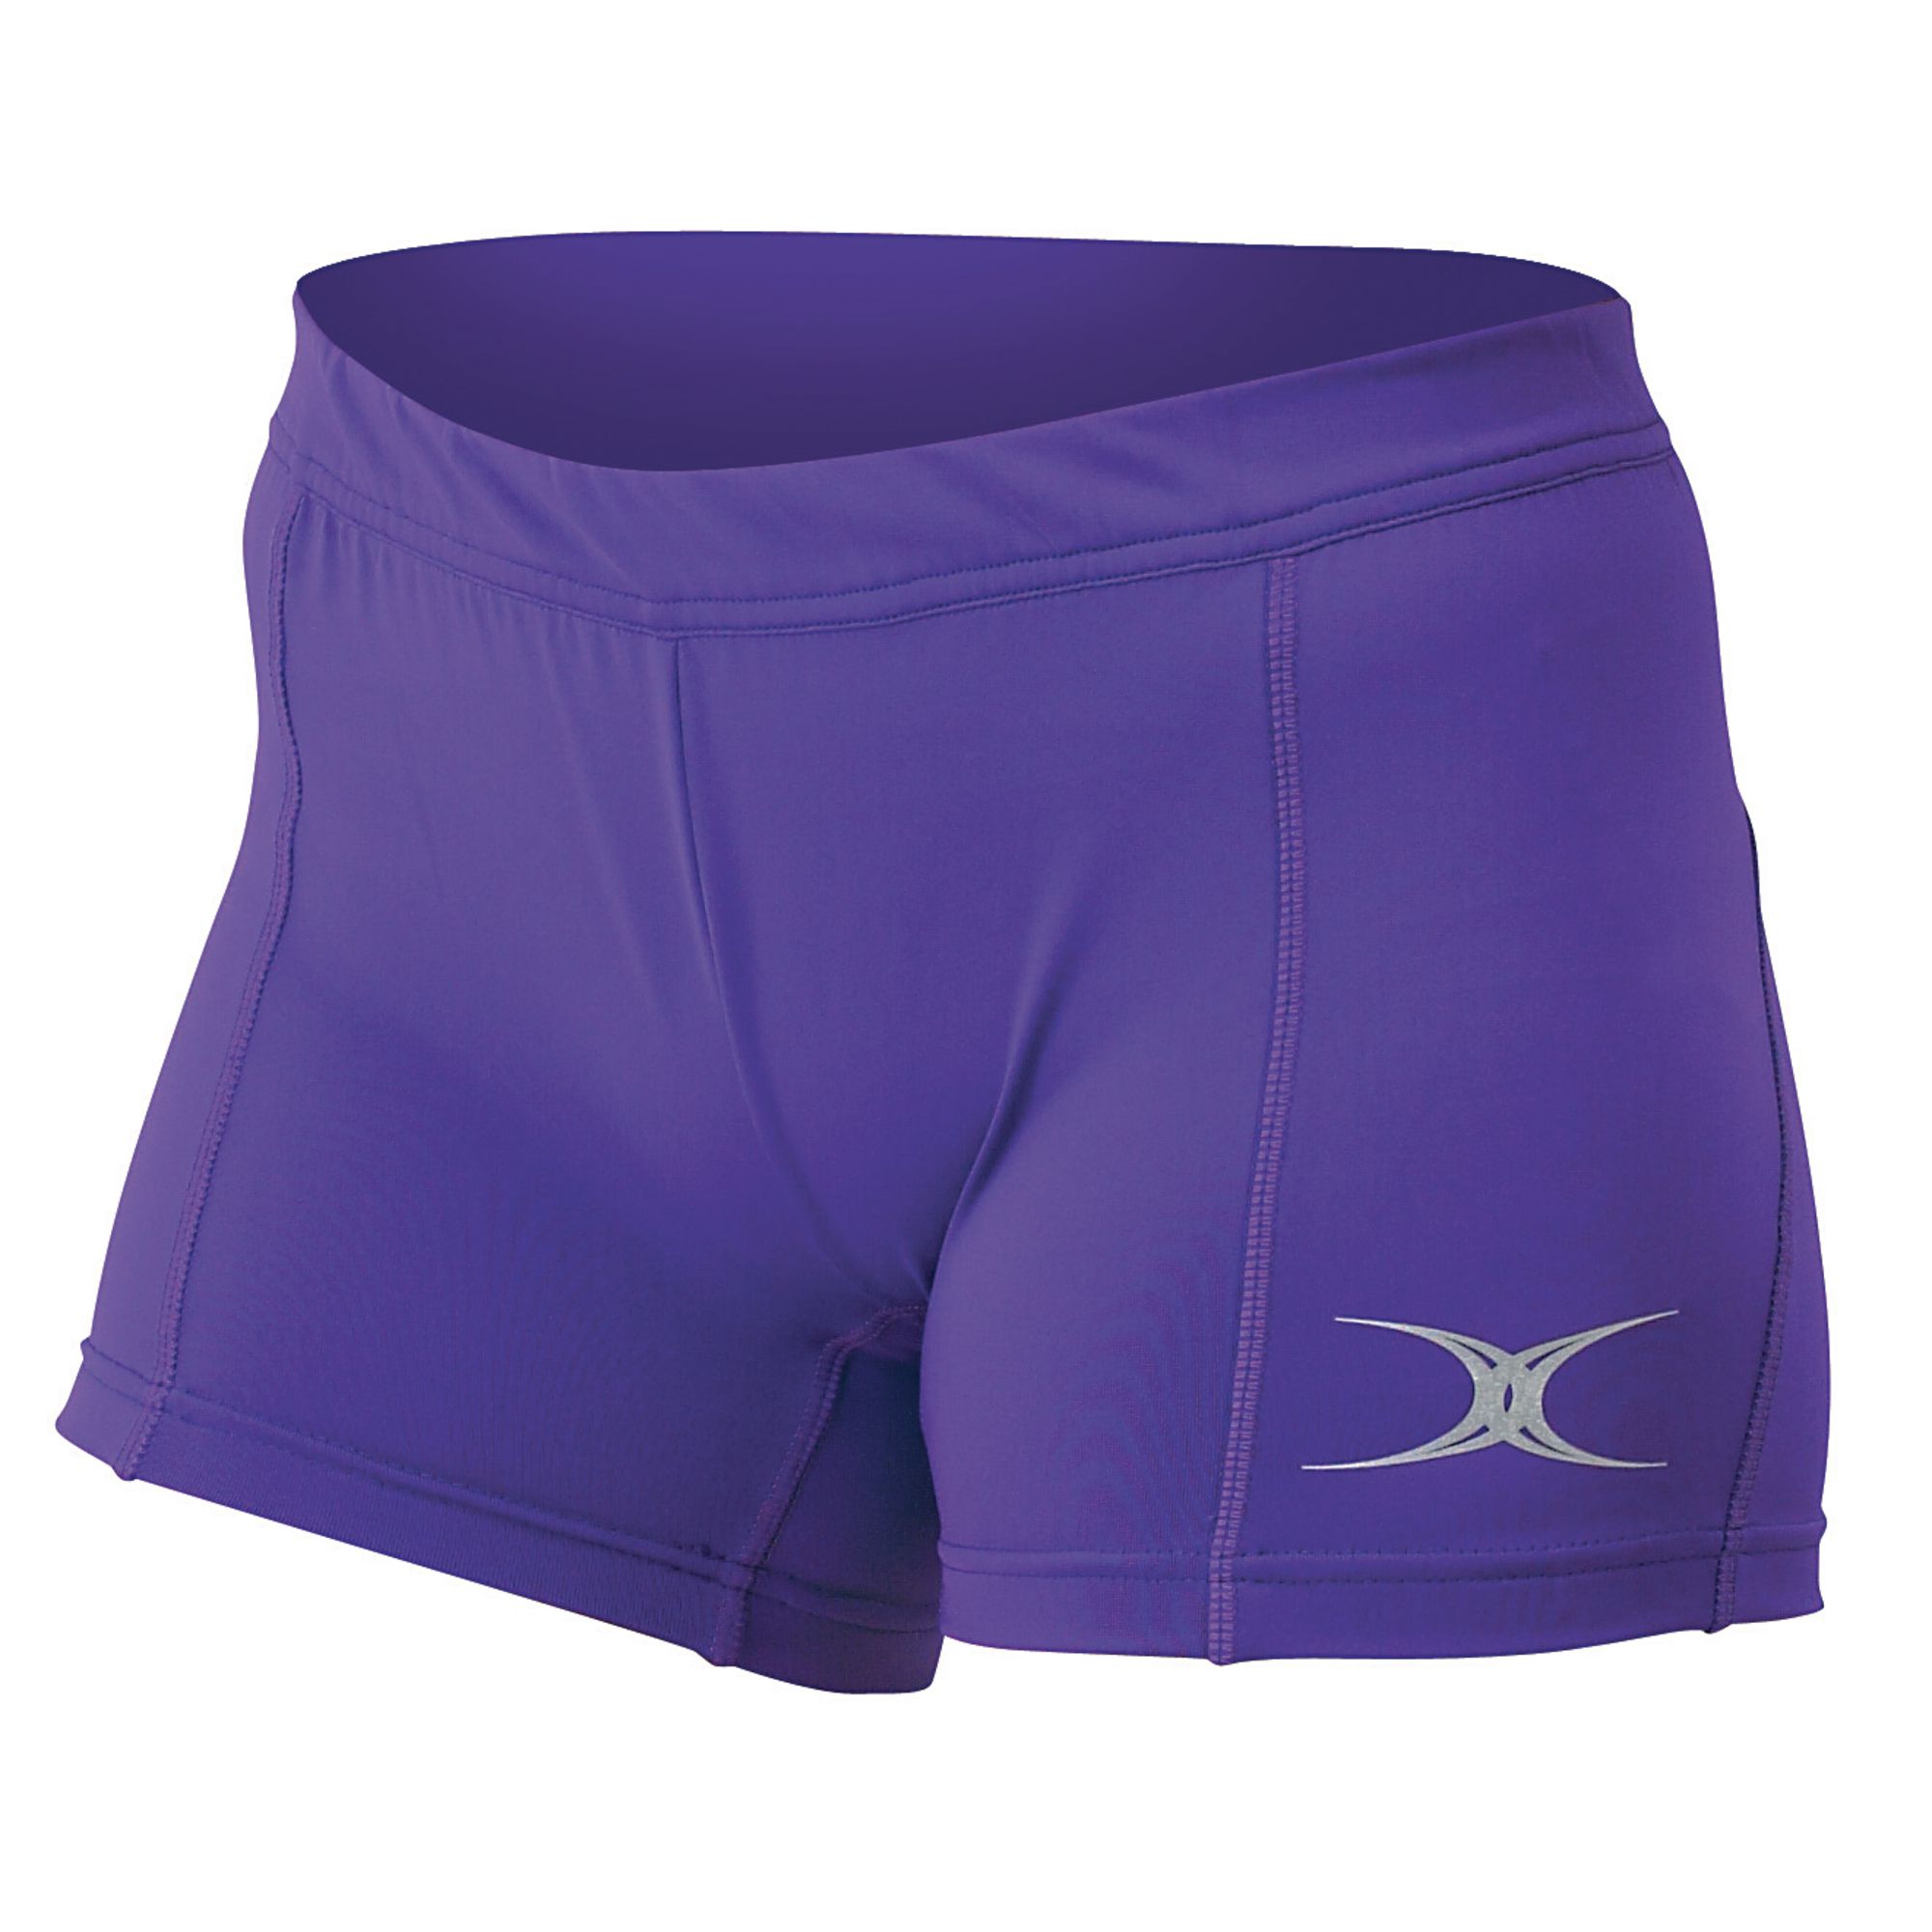 Gilbert Eclipse Nball Shorts S16 Purple